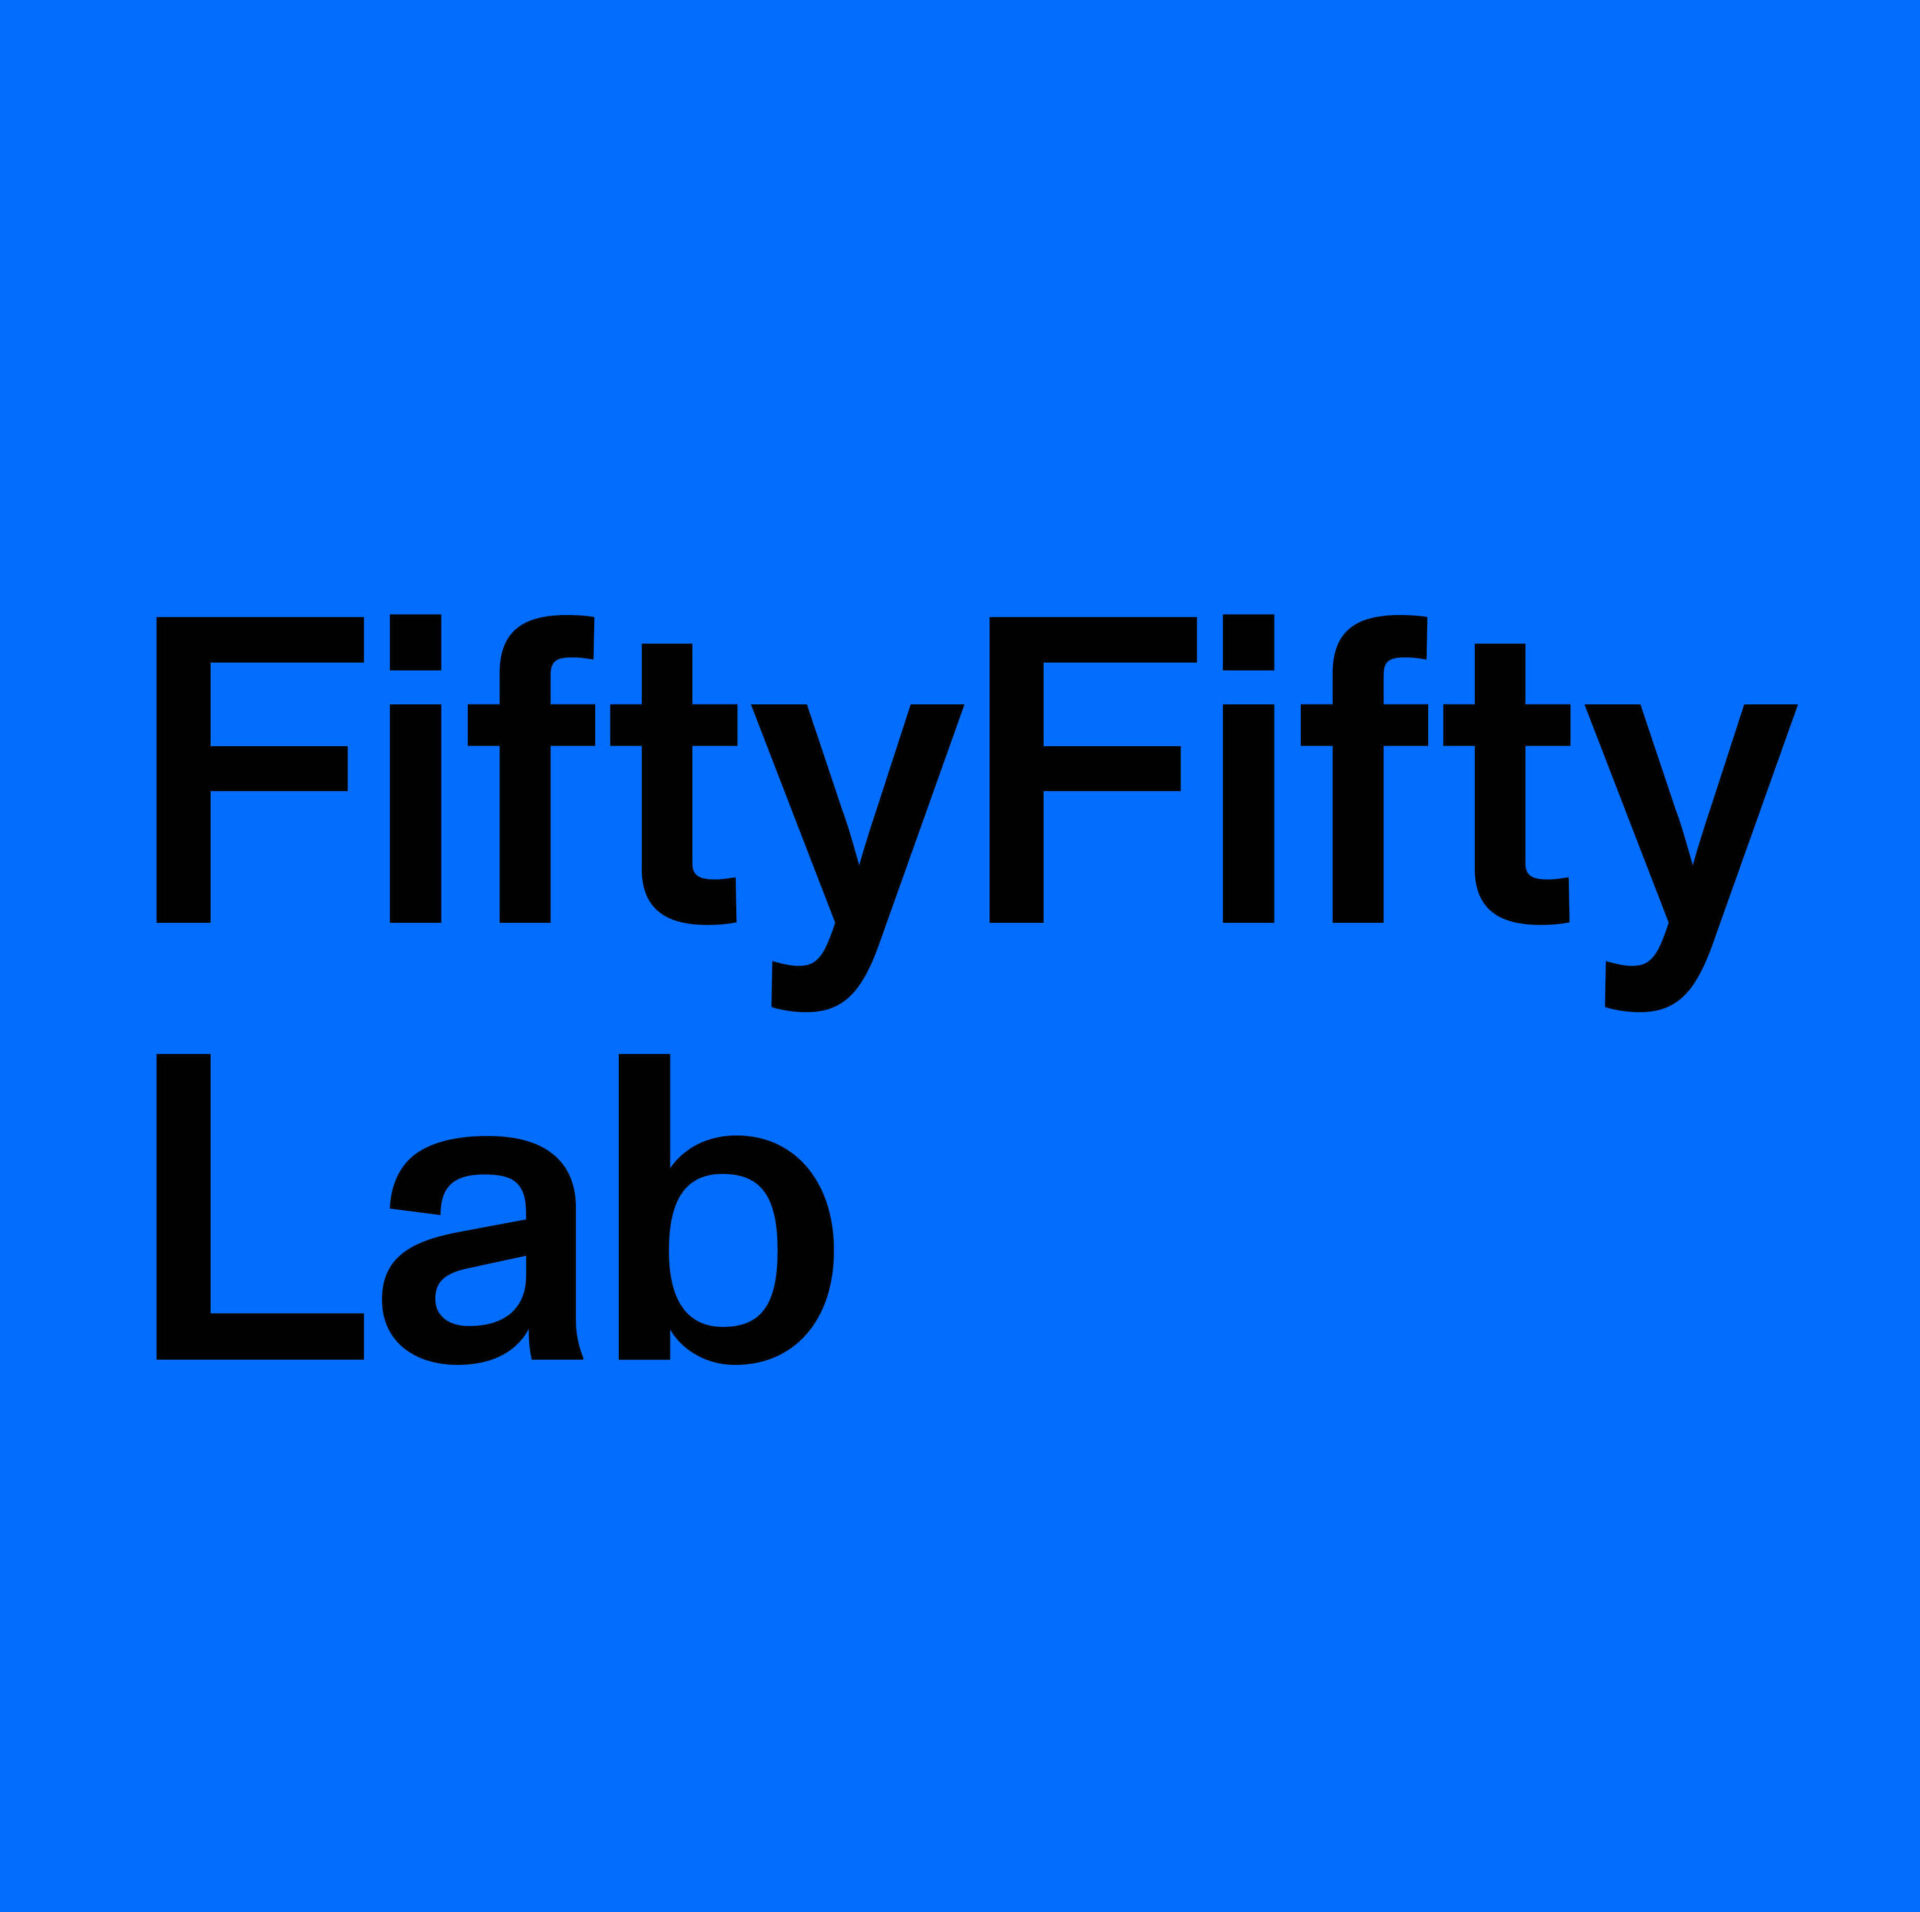 Fifty lab festival